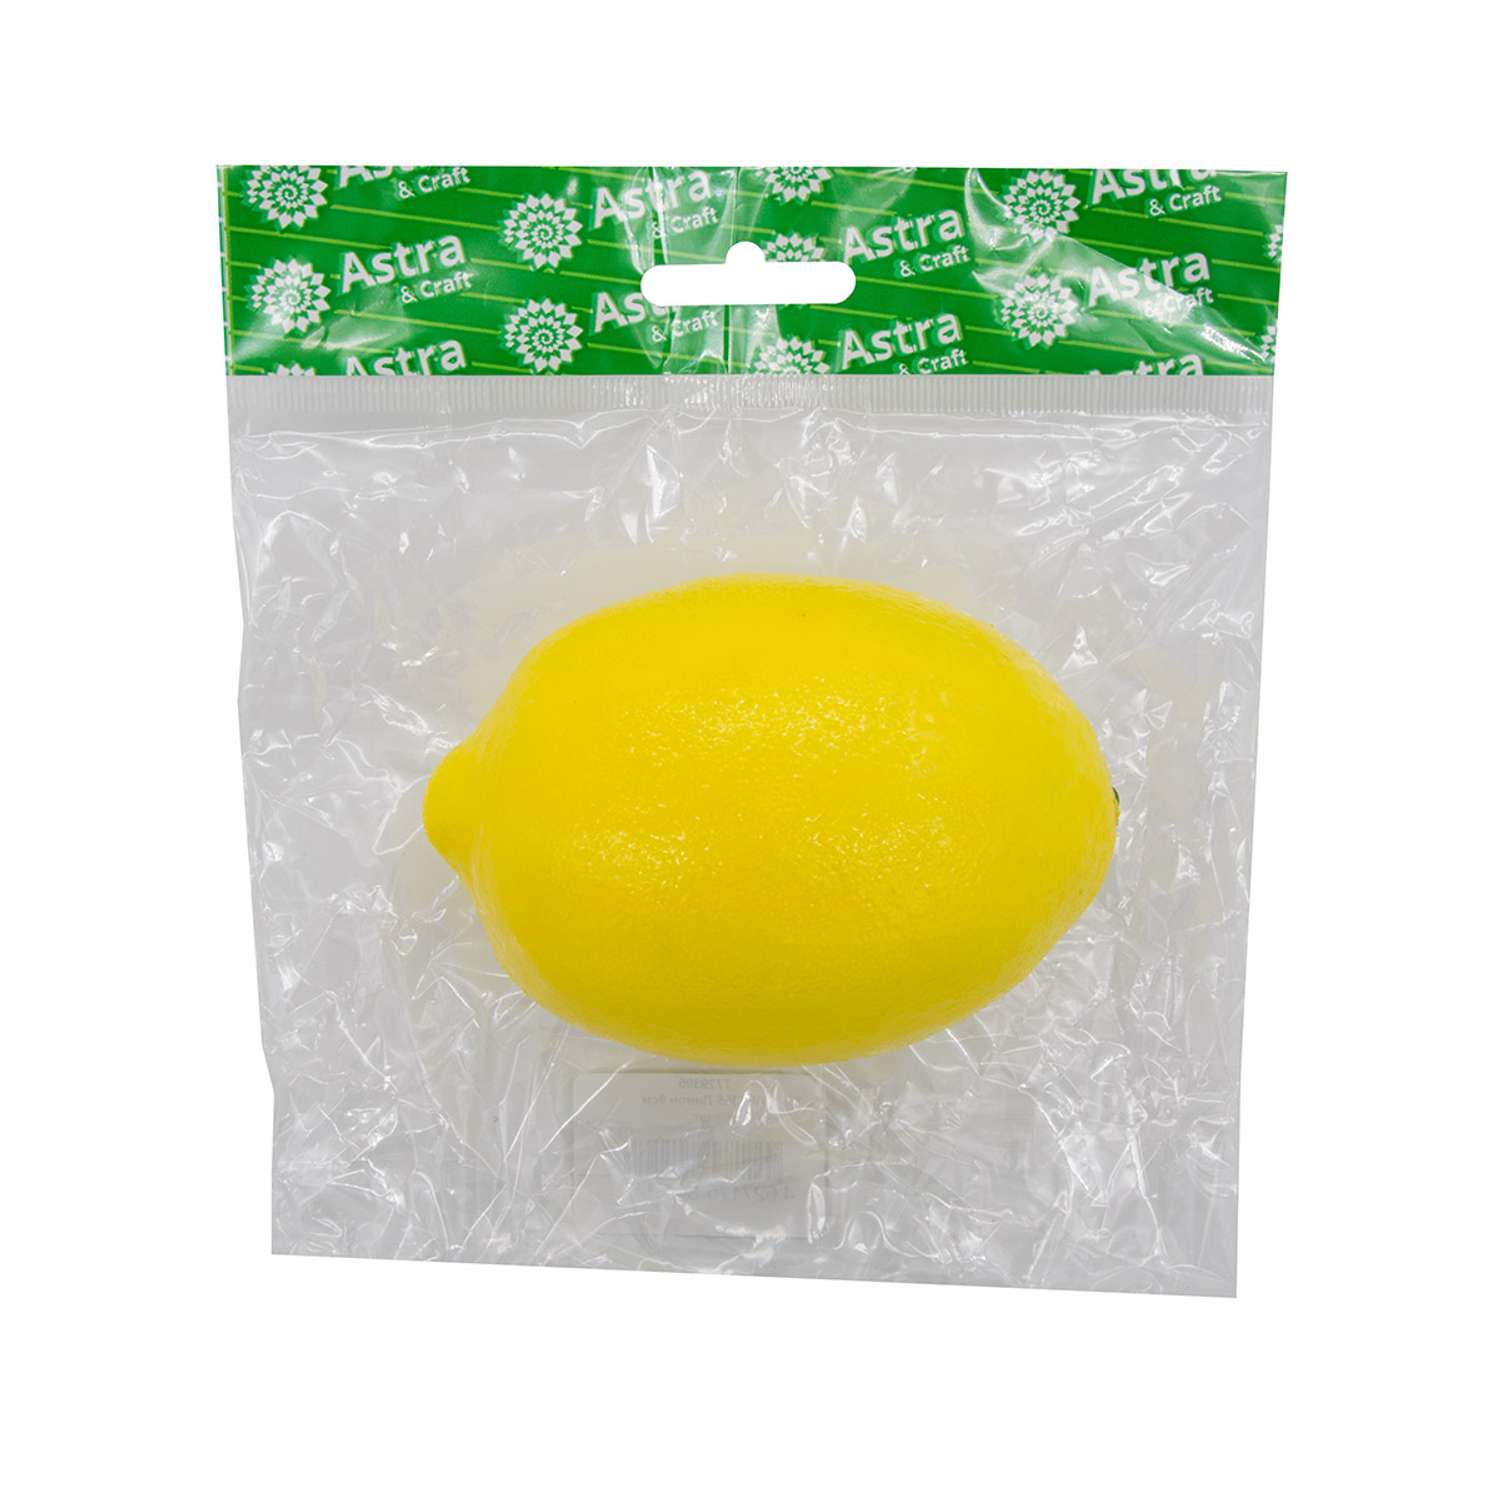 Лимон 9см. АБС лимон 9кг. Le09 Lemon Ice 13x13. Lemon Craft Skin. Девять лимонов